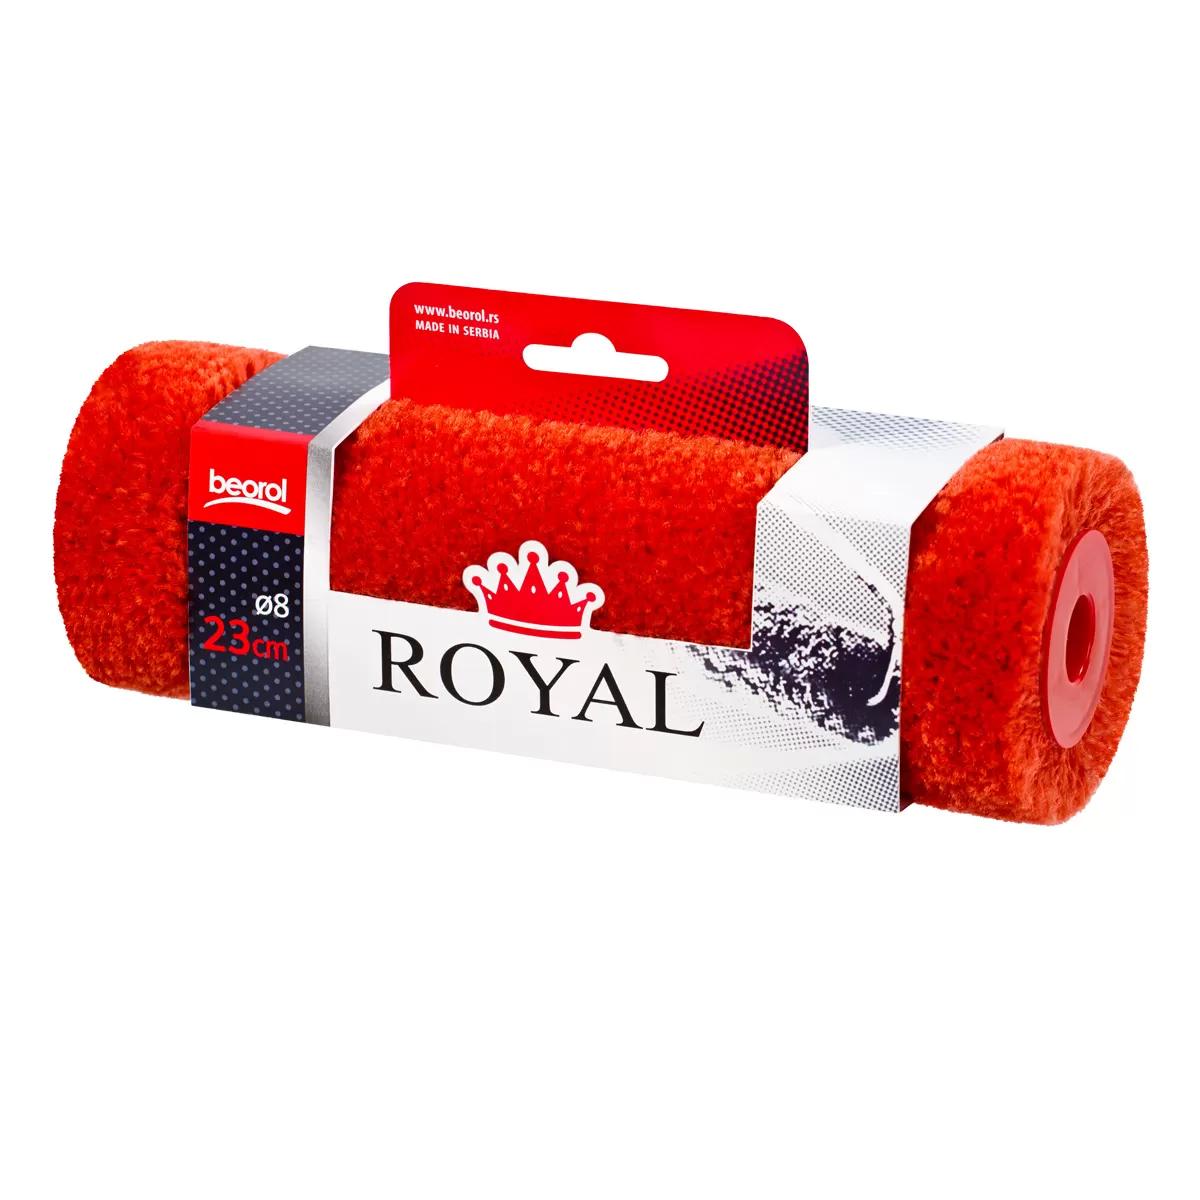 Paint roller Royal 23cm ø8 charge 